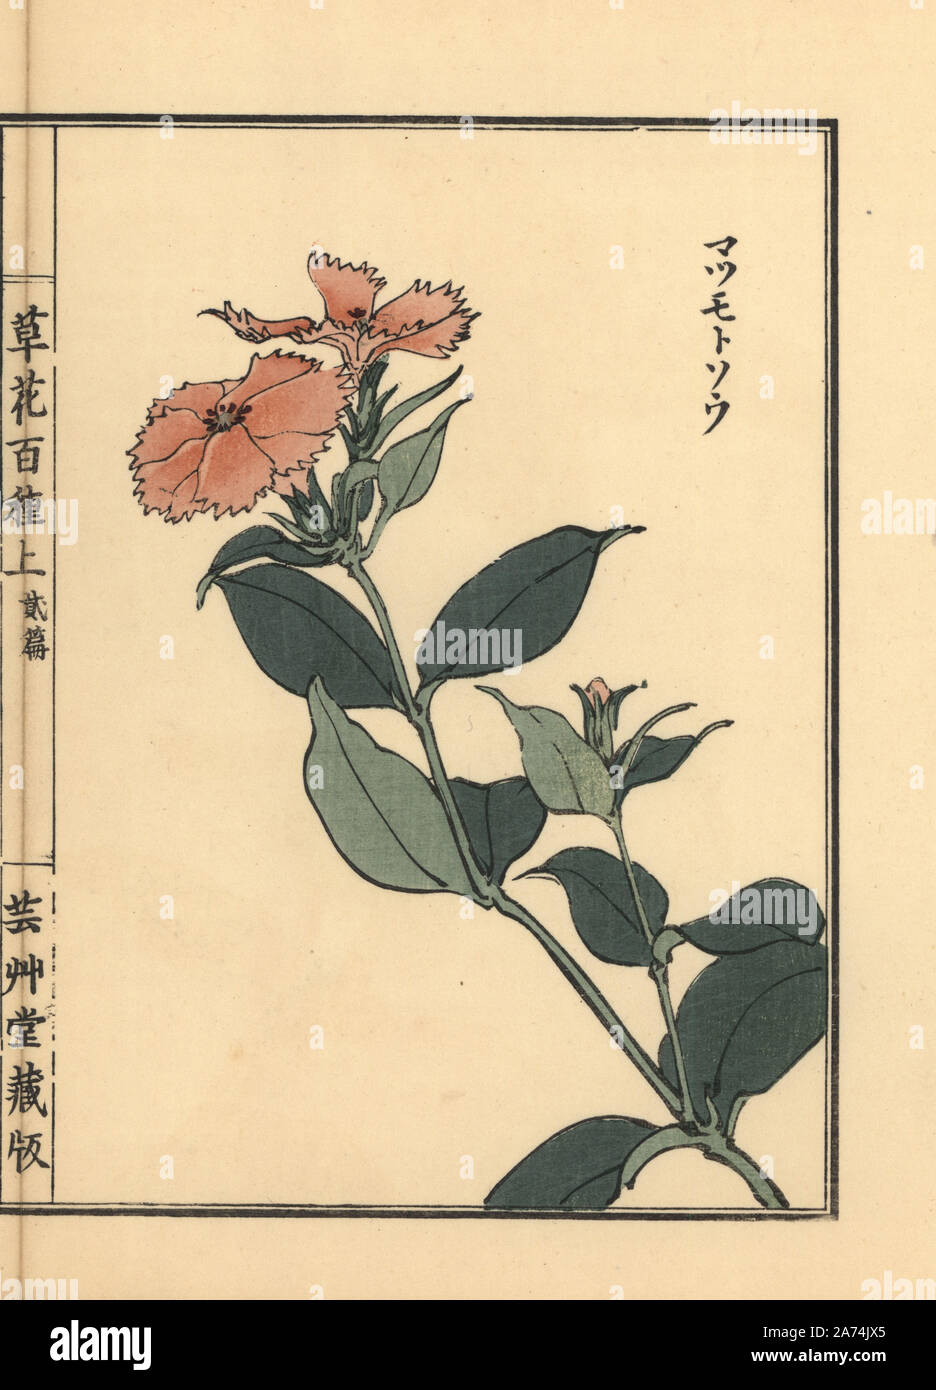 Matsumoto sou or Siebold catchfly, Lychnis sieboldii. Handcoloured woodblock print by Kono Bairei from Kusa Bana Hyakushu (One Hundred Varieties of Flowers), Tokyo, Yamada, 1901. Stock Photo